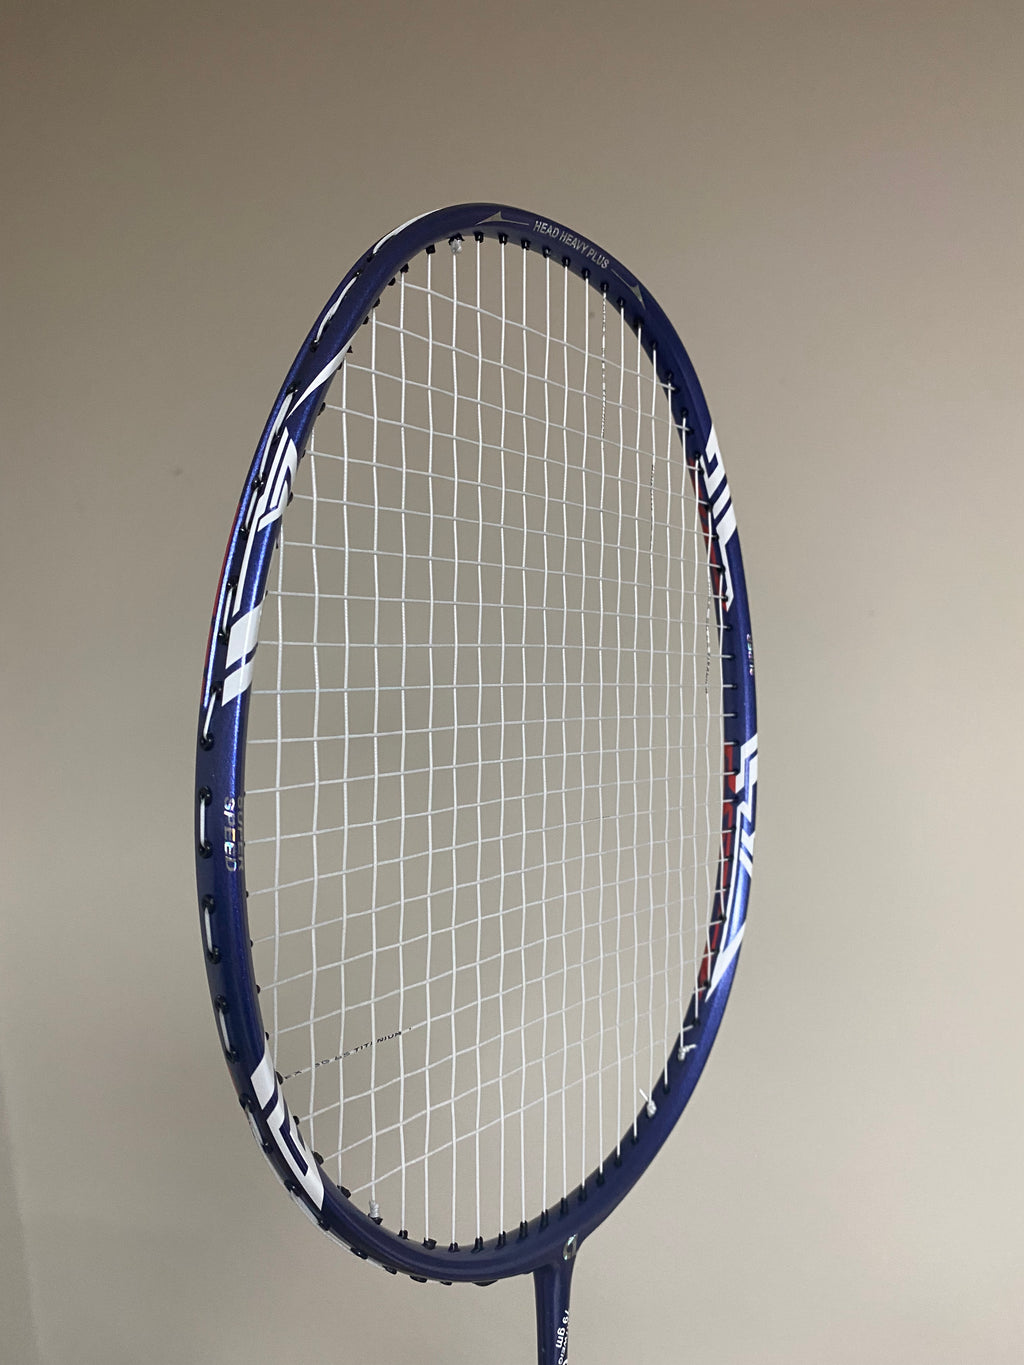 Apacs Blend Duo 10x 6u Lightweight Badminton Racket badminton racket review